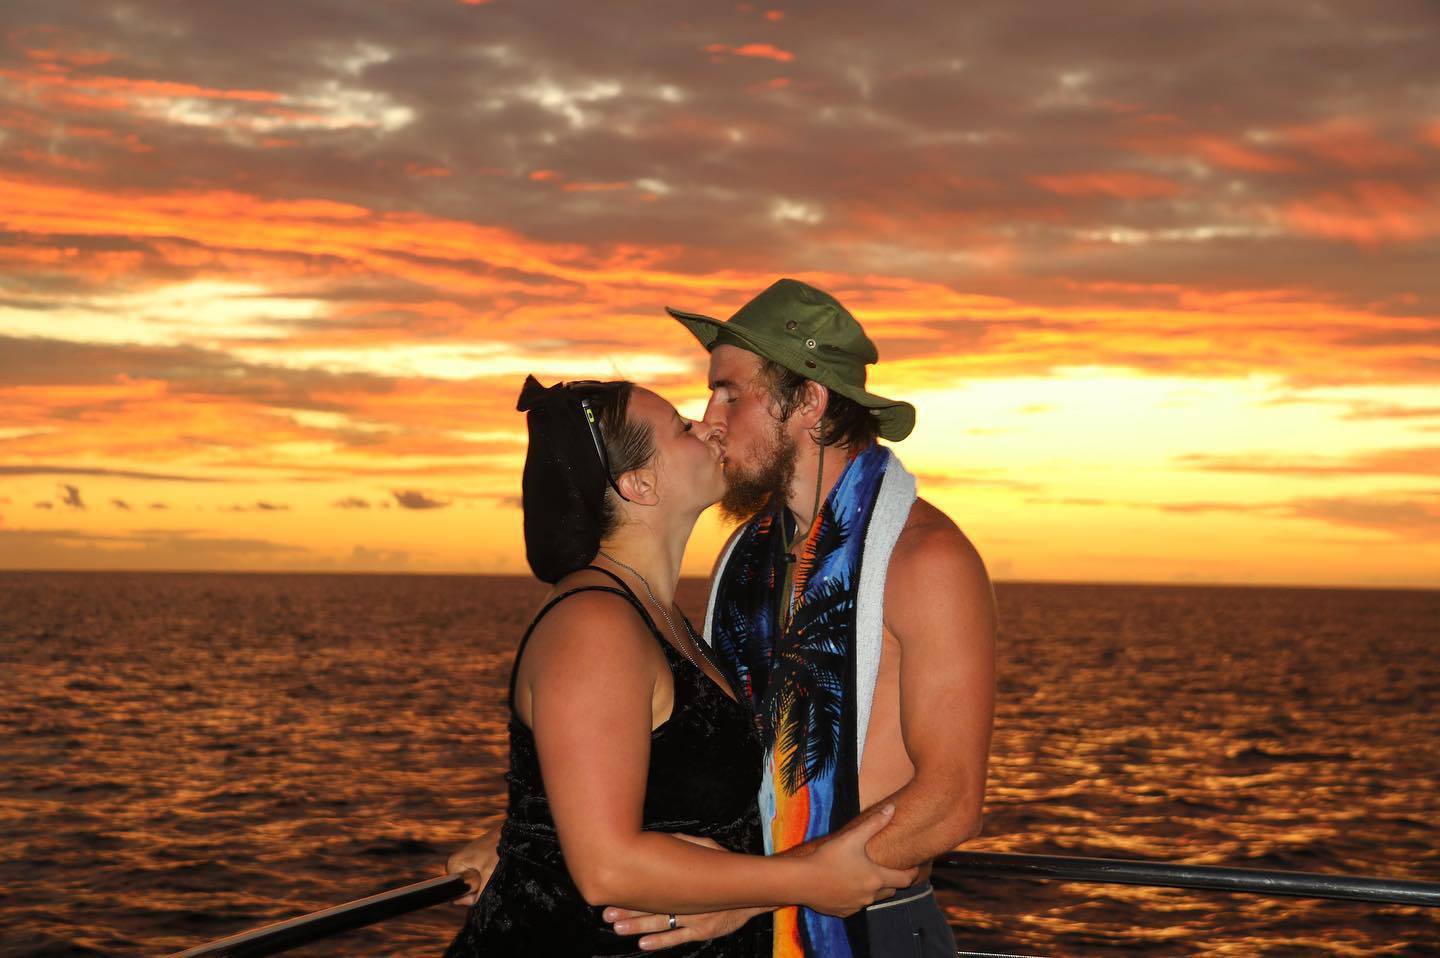 koolina sunset dinner and snorkel cruise ocean joy cruises oahu hawaii